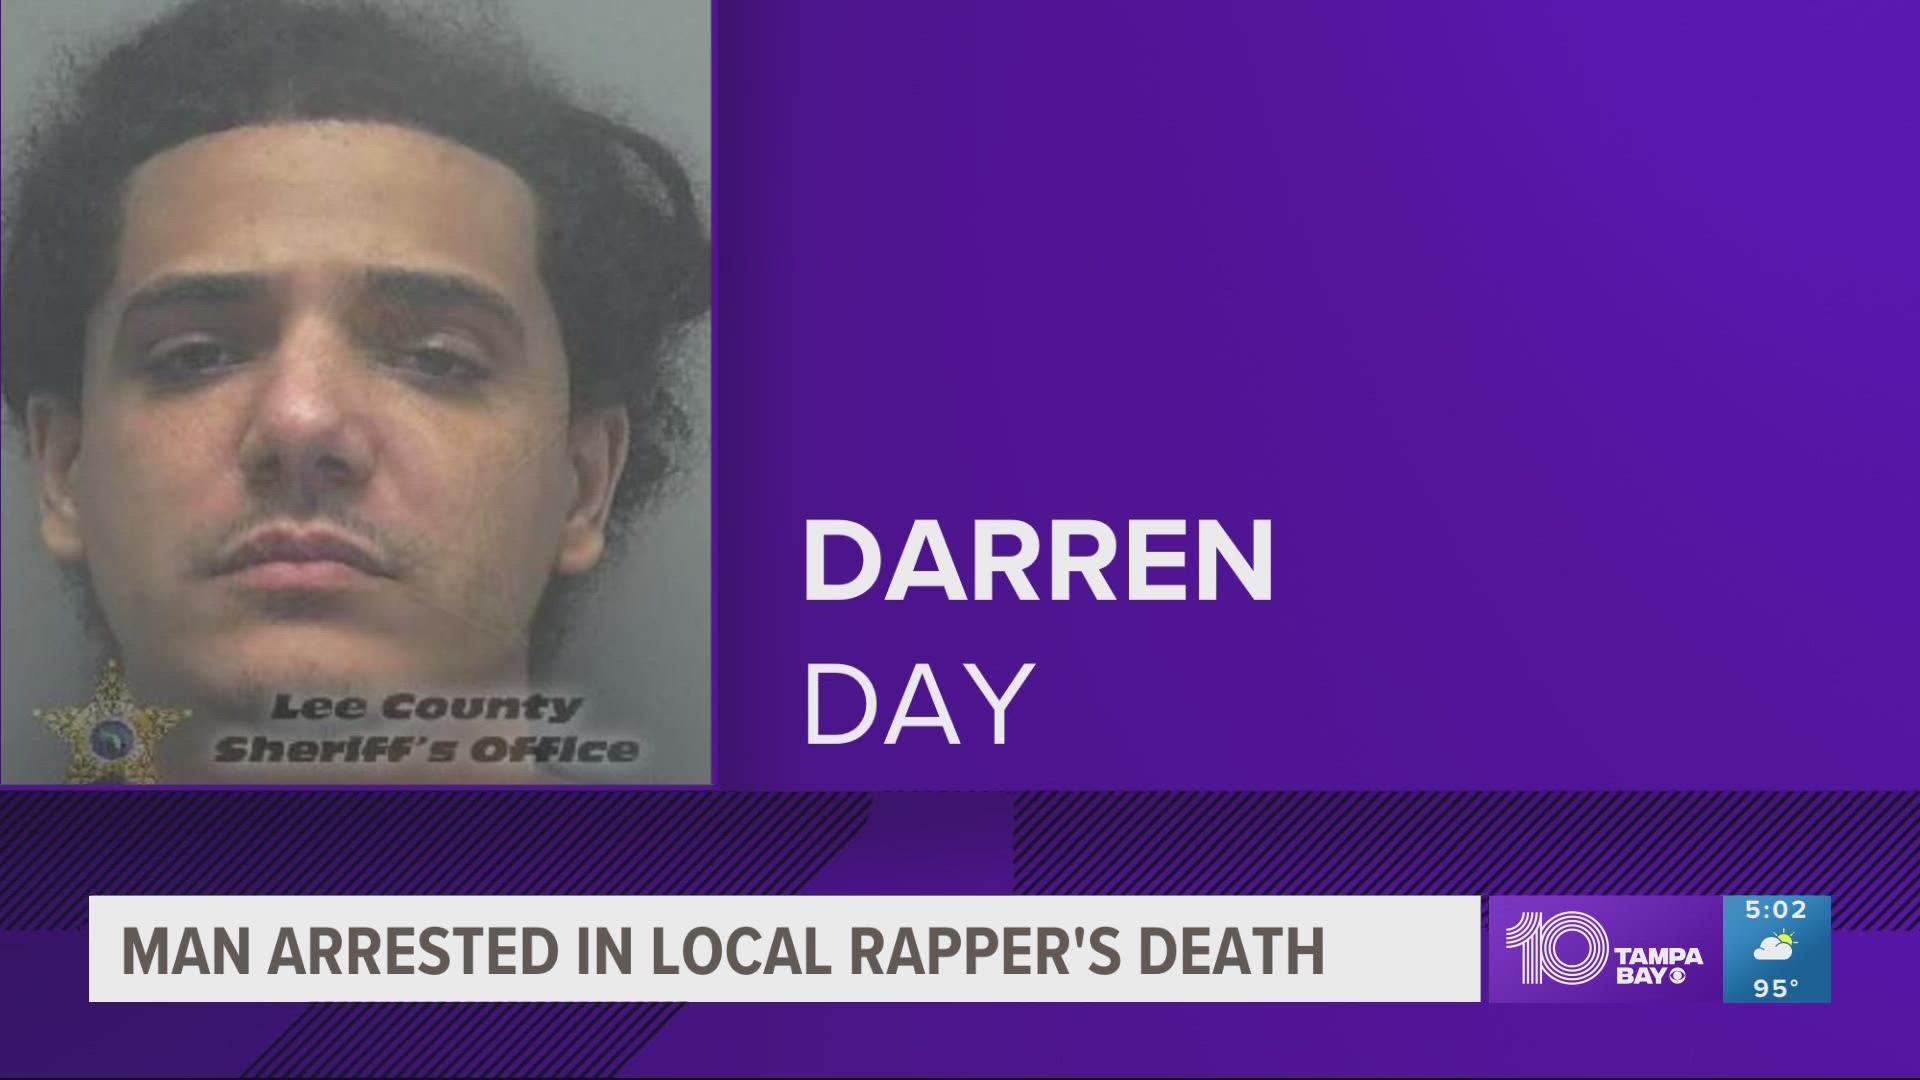 Darren Christopher Day was taken into custody in Lee County.